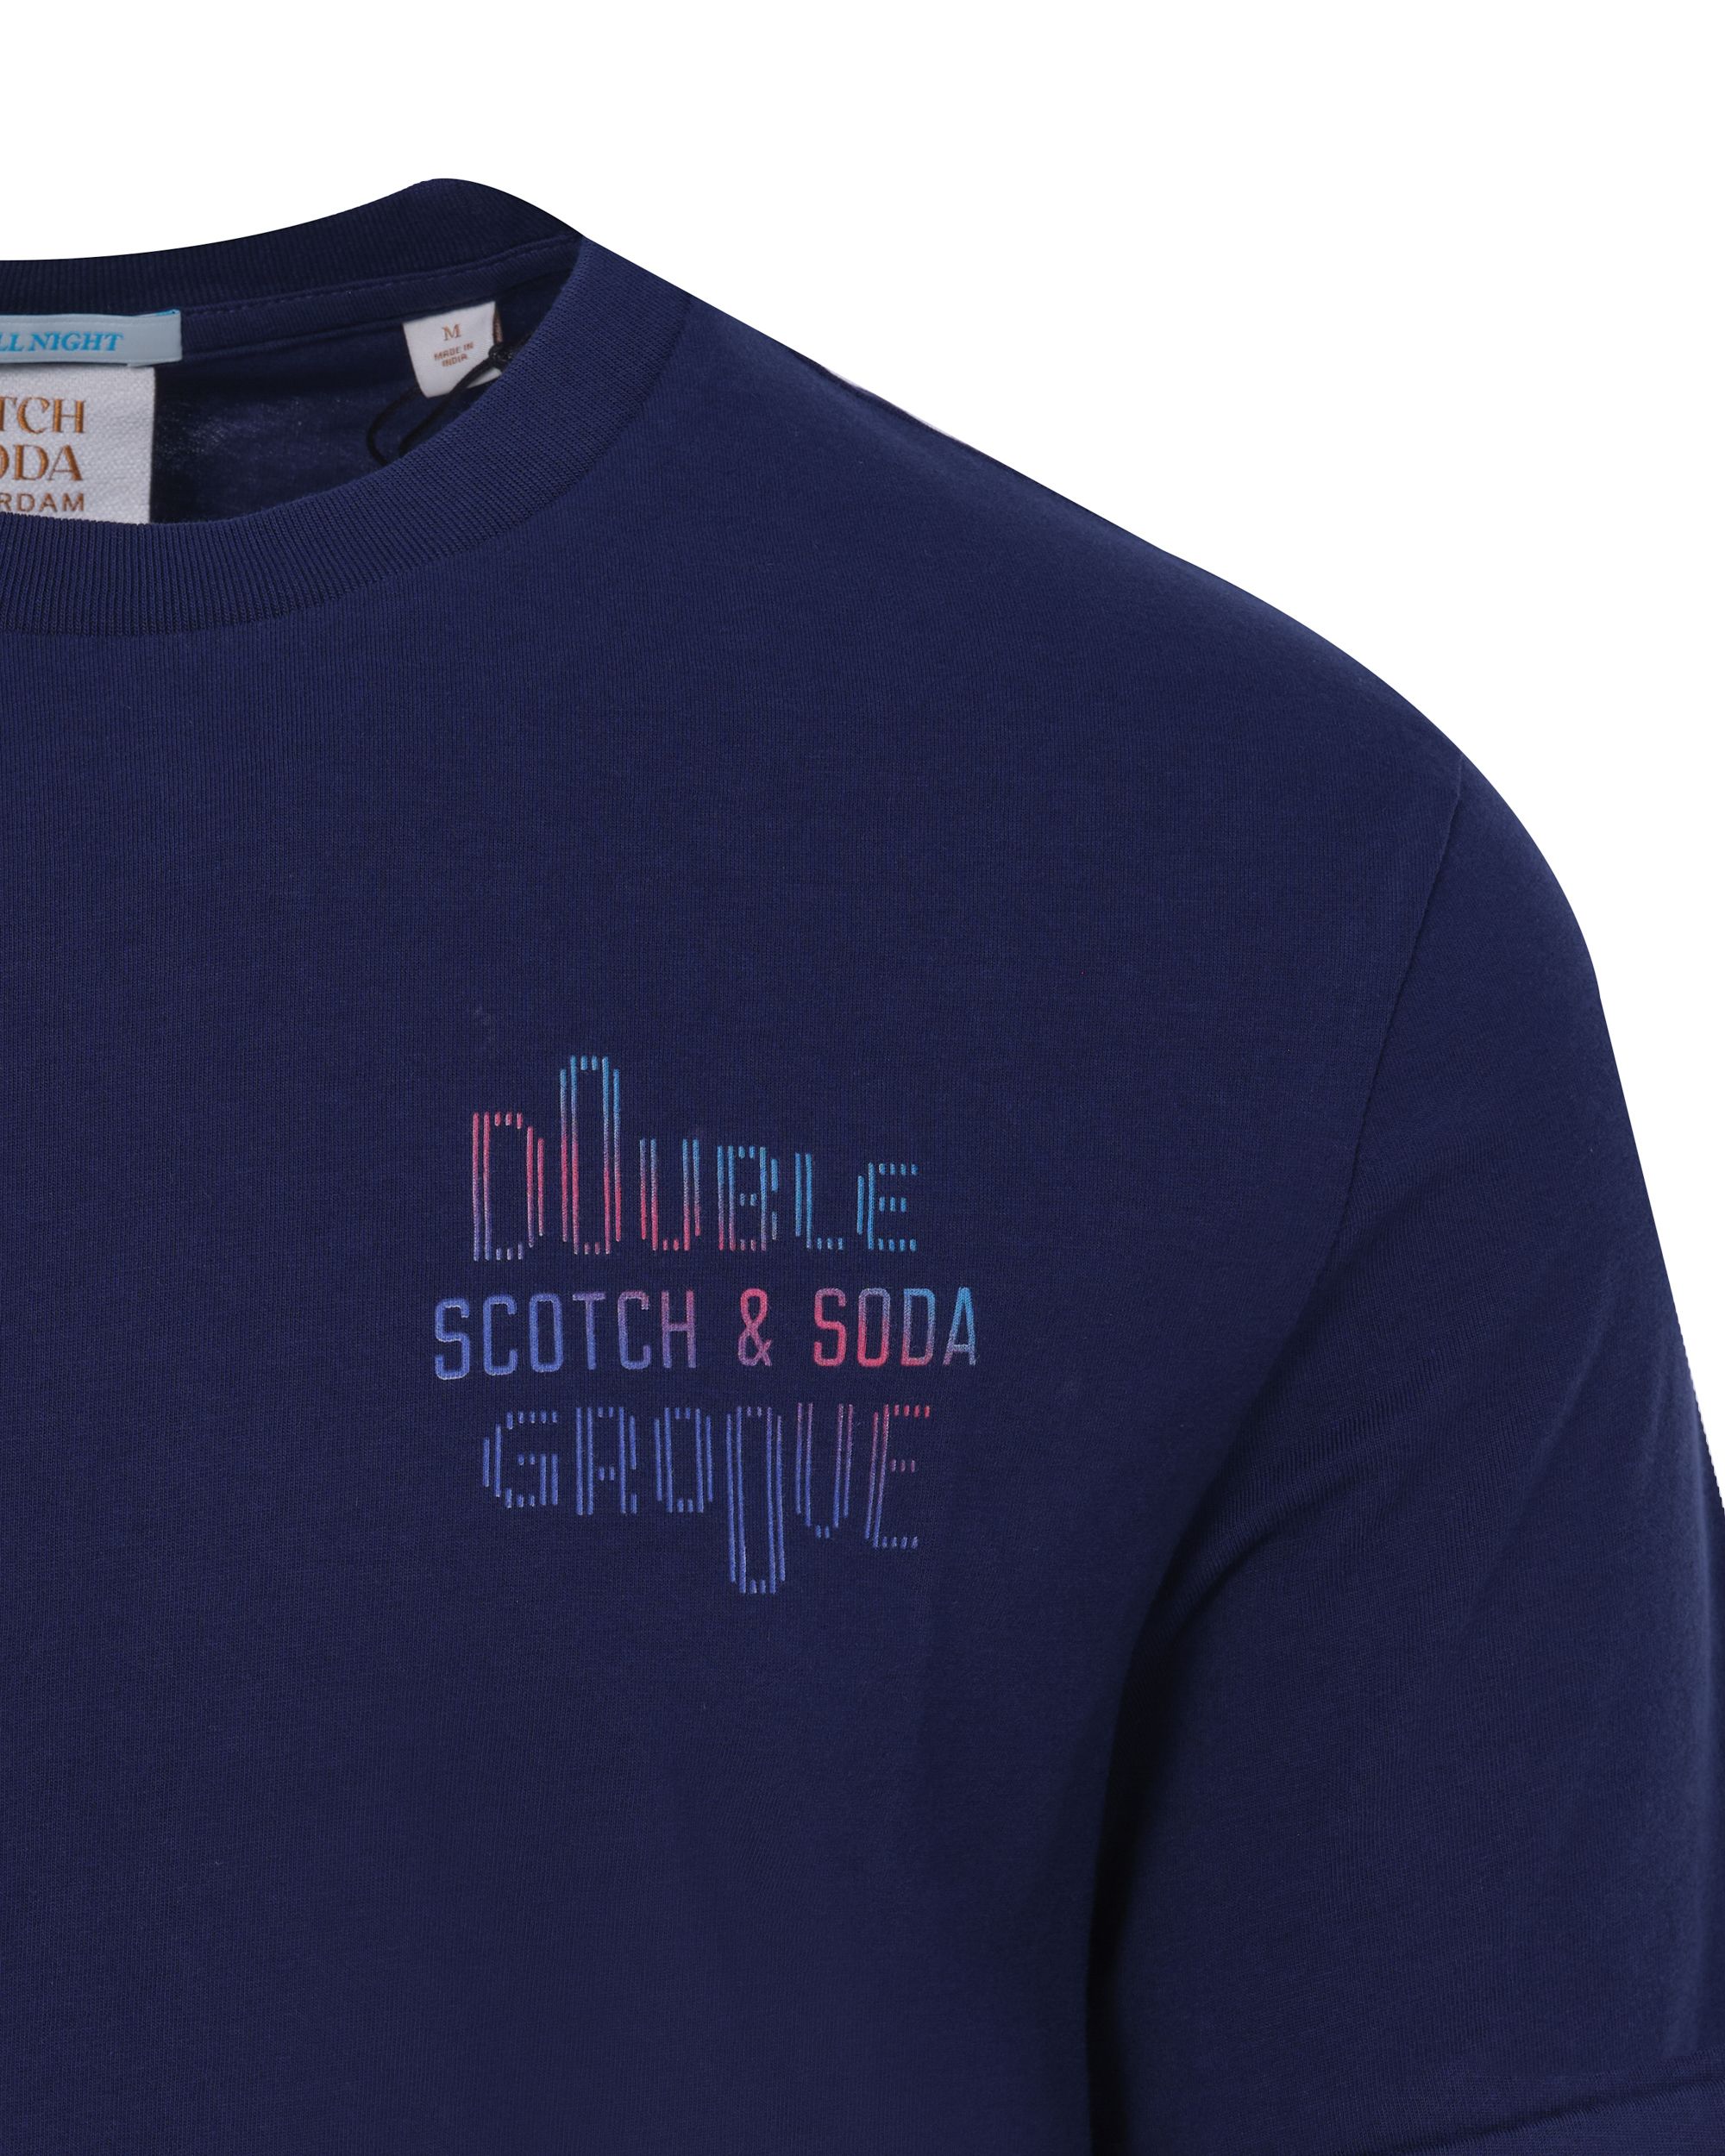 Scotch & Soda T-shirt KM Donker blauw 086896-001-L